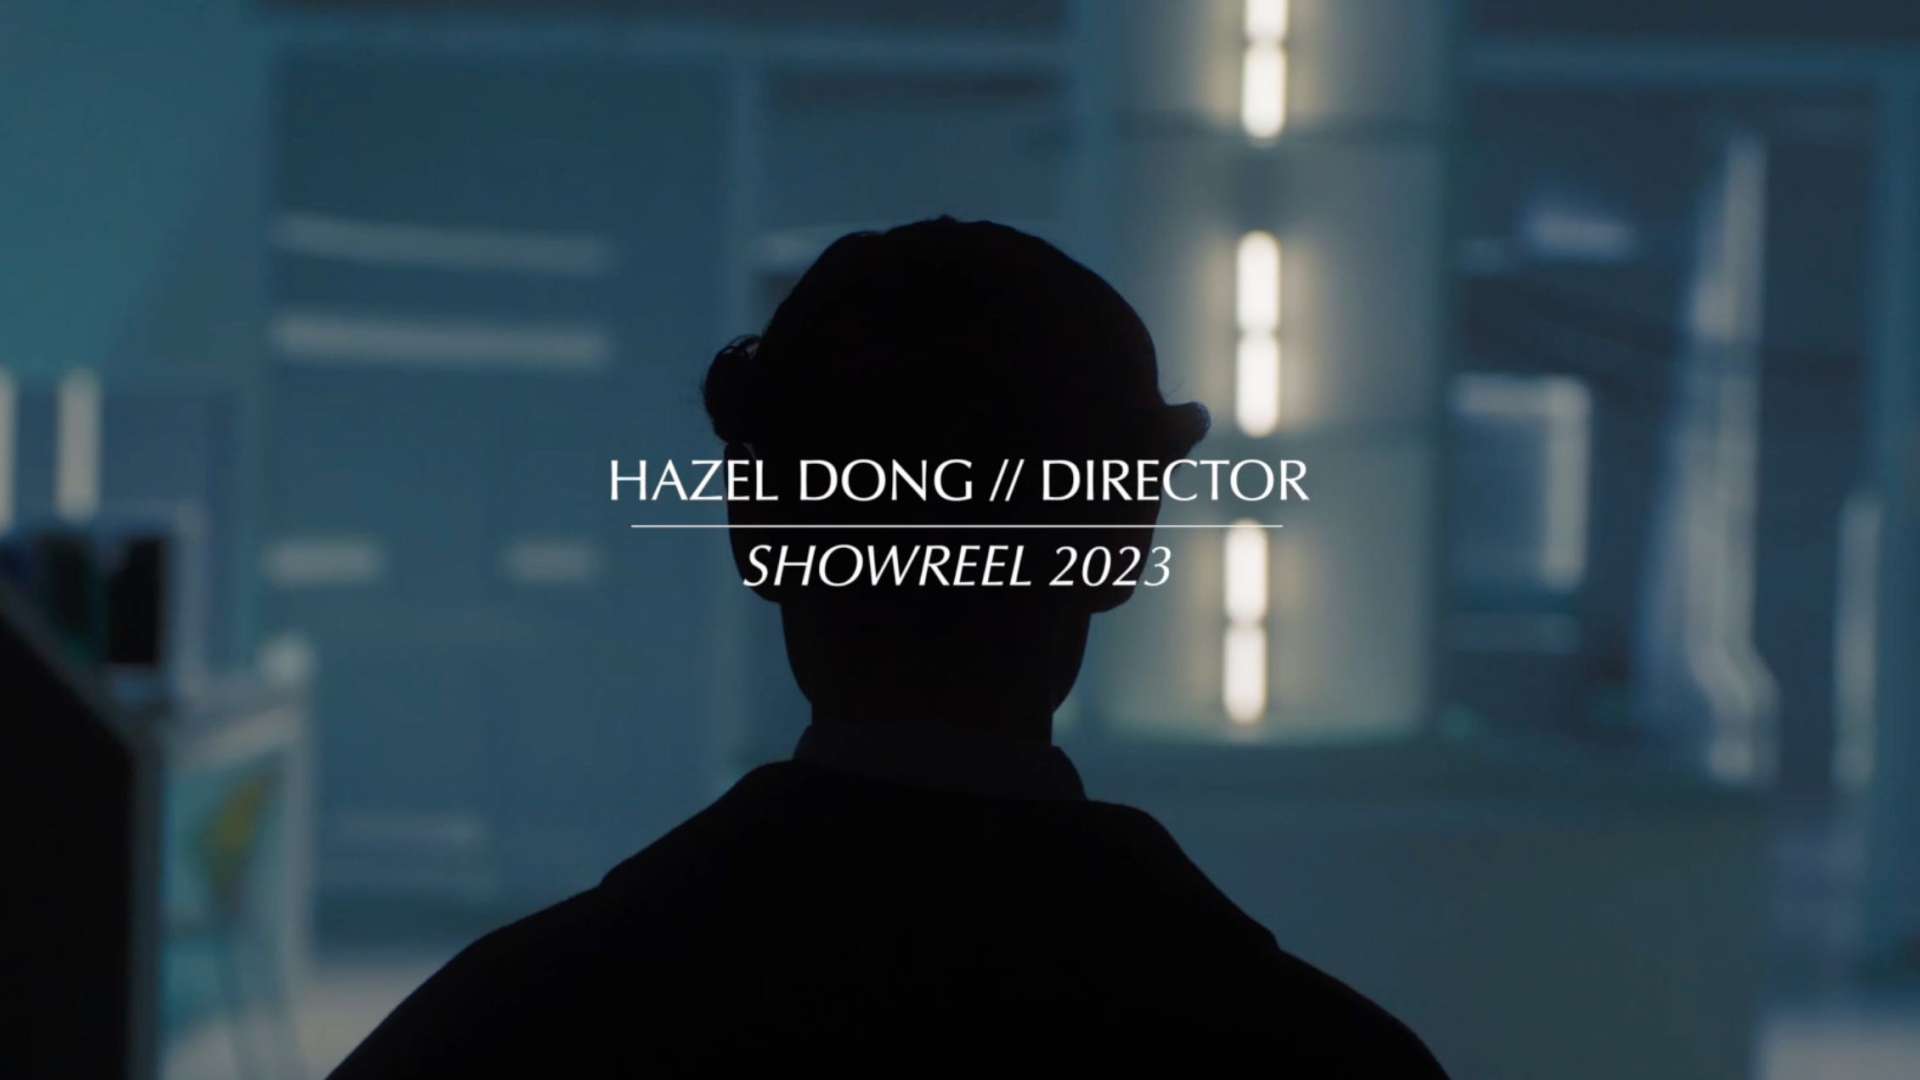 Hazel showreel 2023